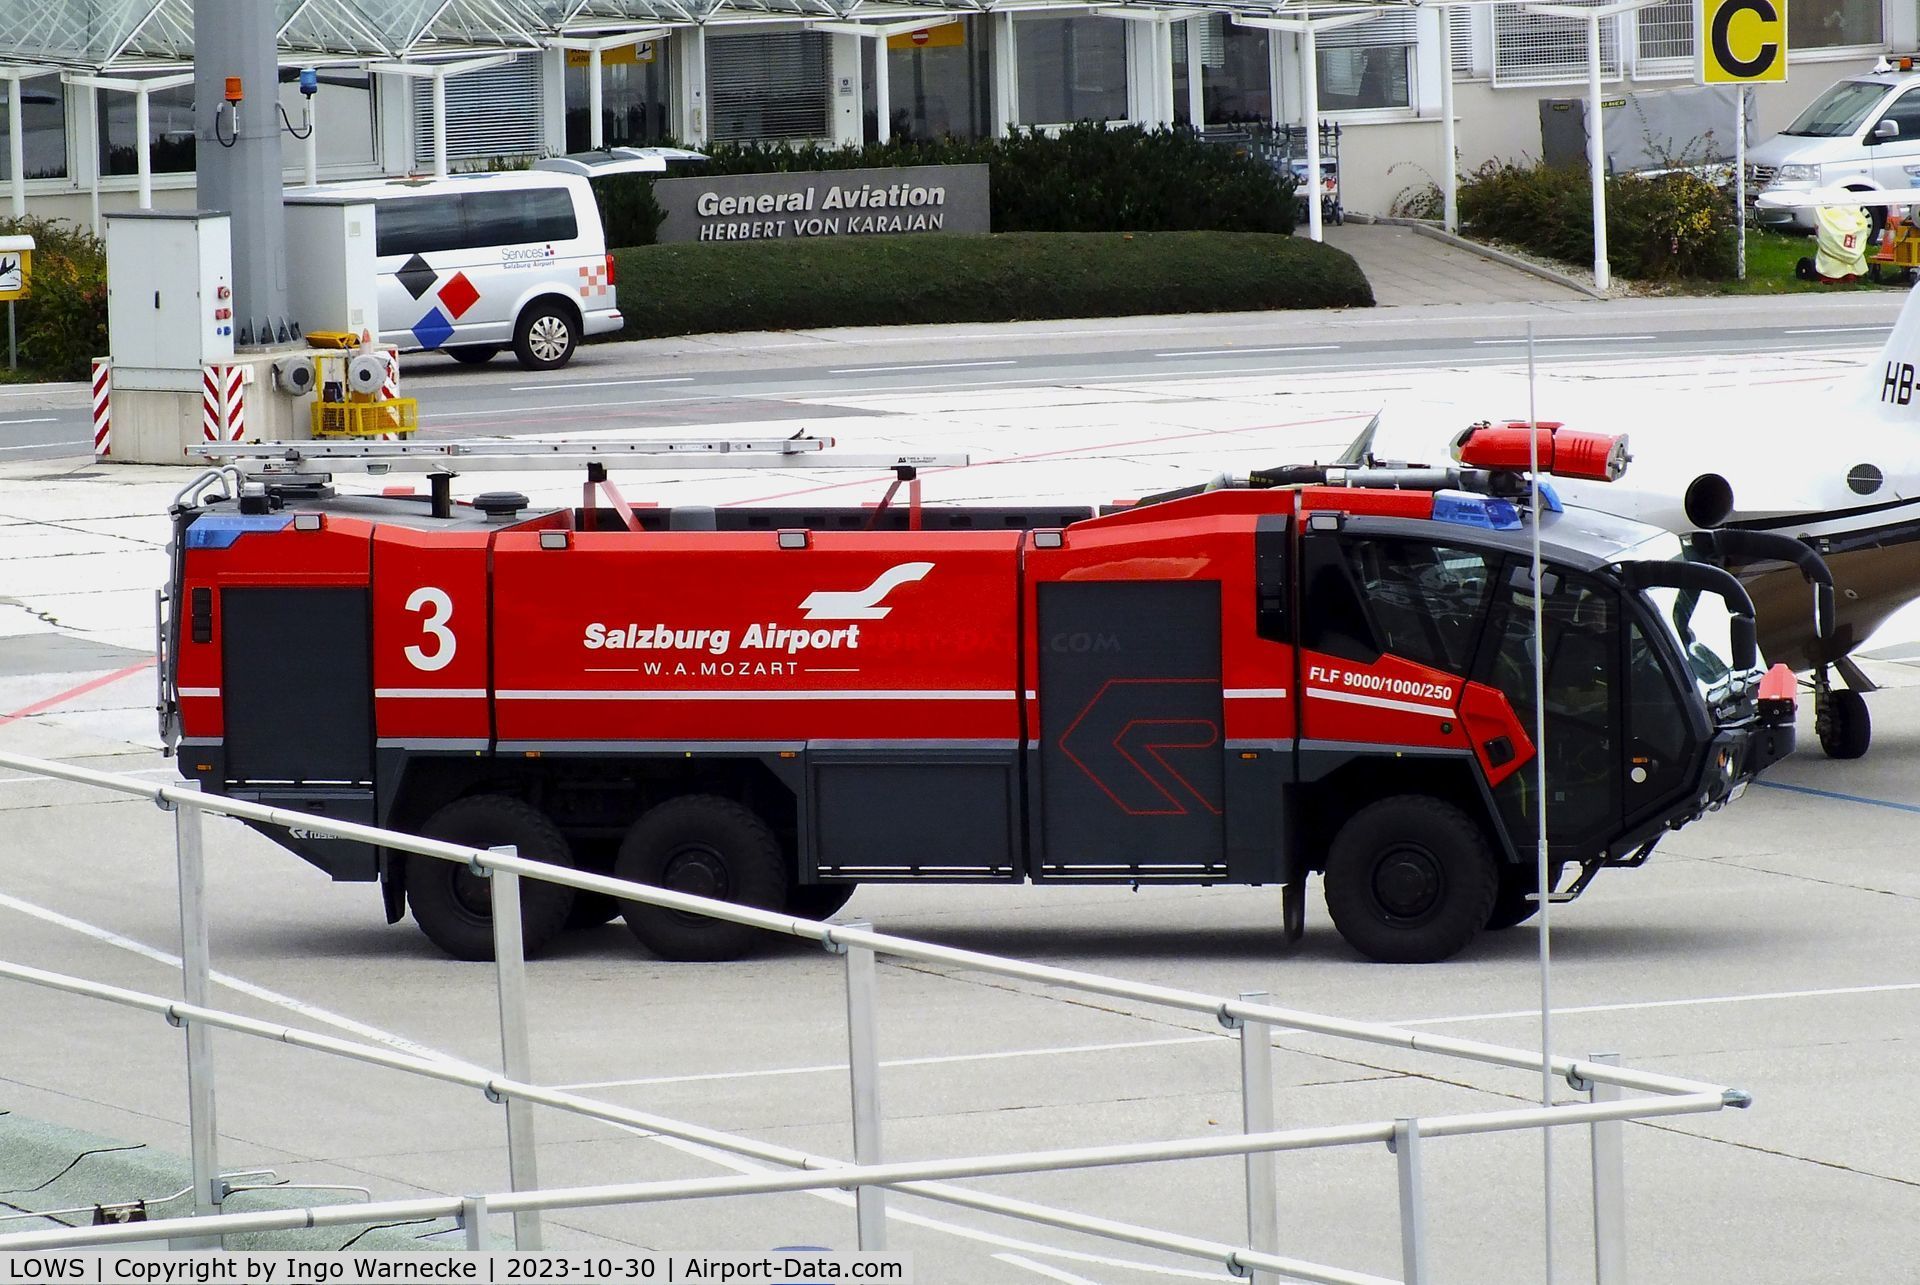 Salzburg Airport, Salzburg Austria (LOWS) - airport fire truck at Salzburg airport